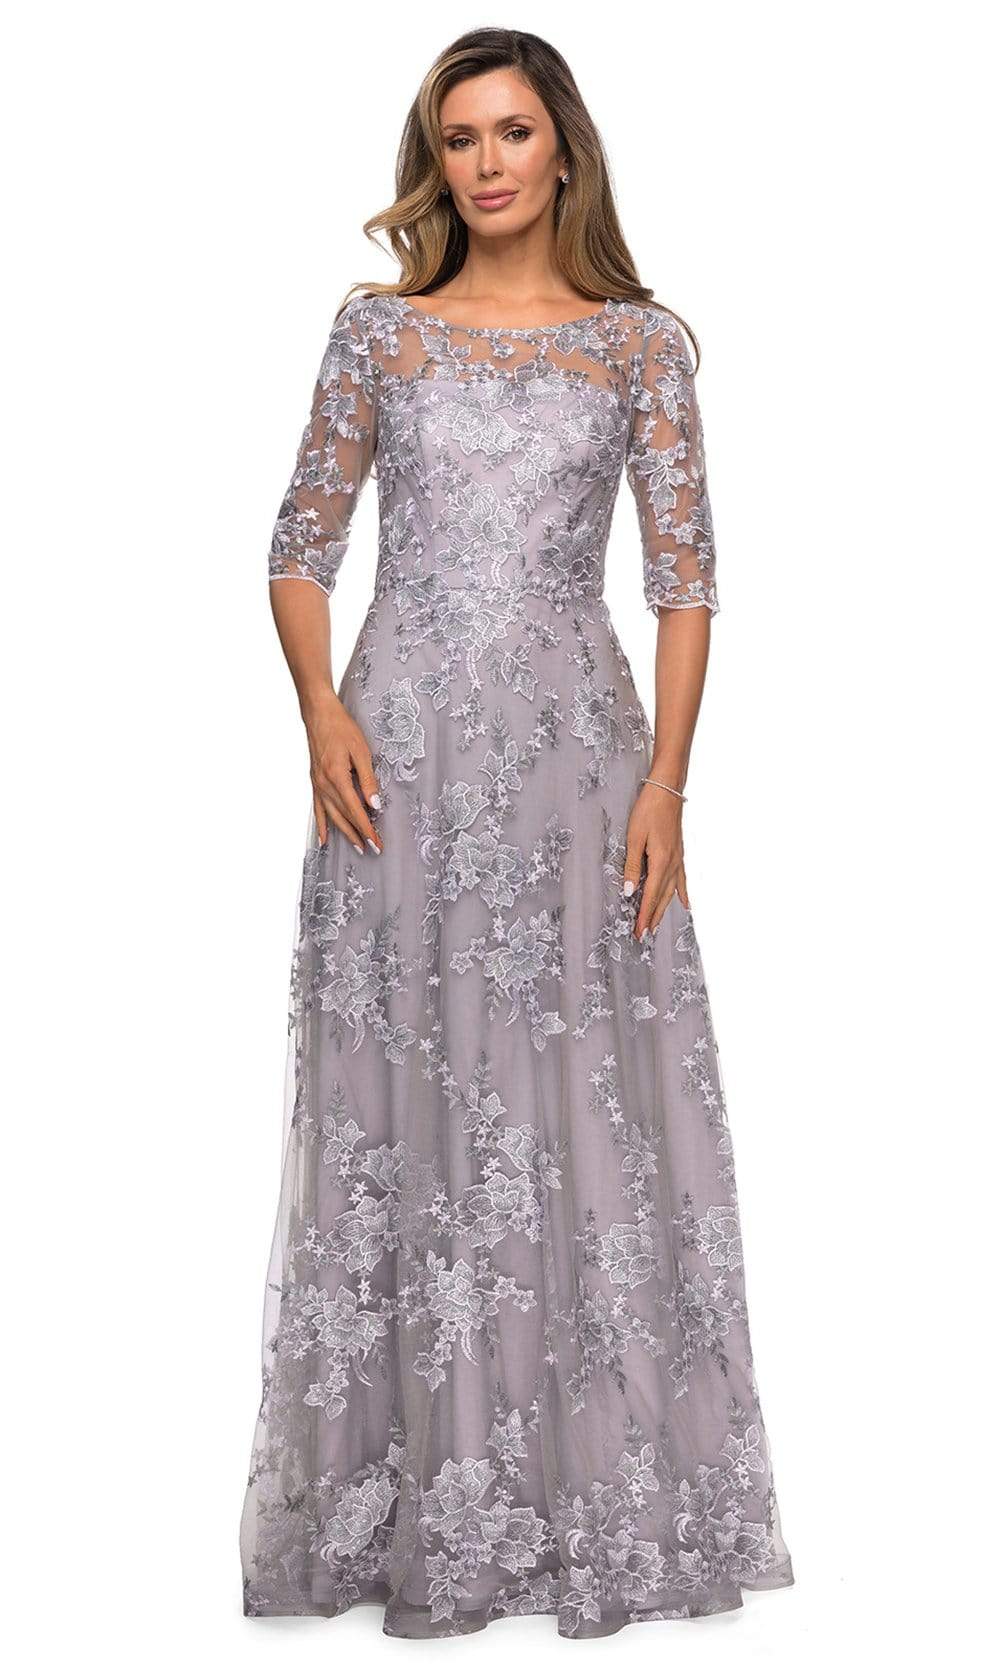 La Femme - 27854 Embroidered Lace Quarter Sleeve A-Line Dress Mother of the Bride Dresses 2 / Lavender/Gray